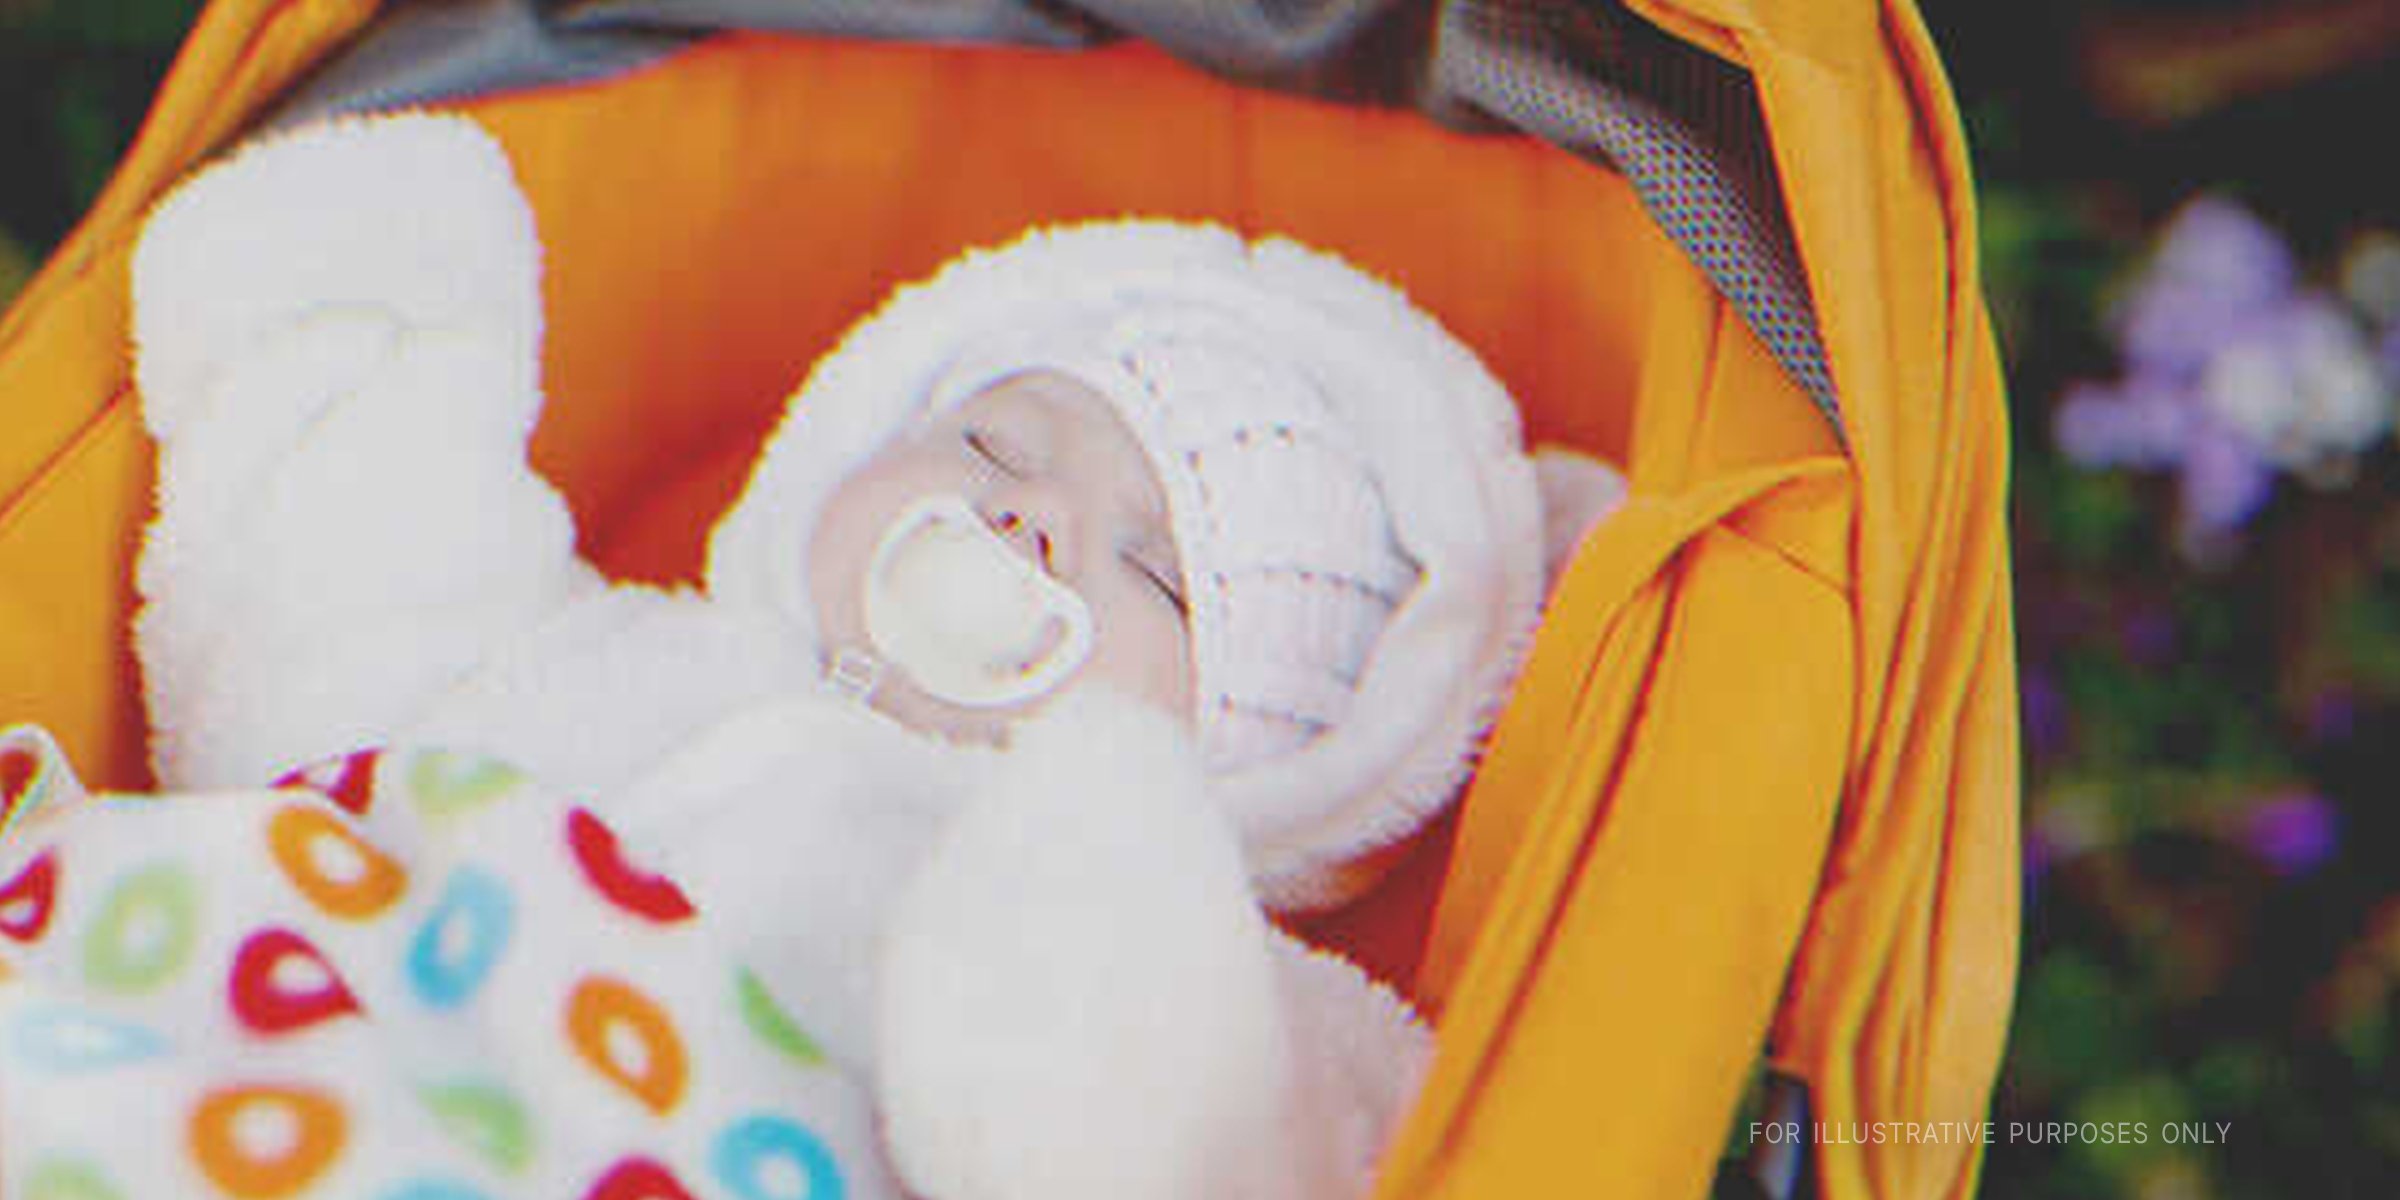 Baby fast asleep in a stroller | Source: Shutterstock